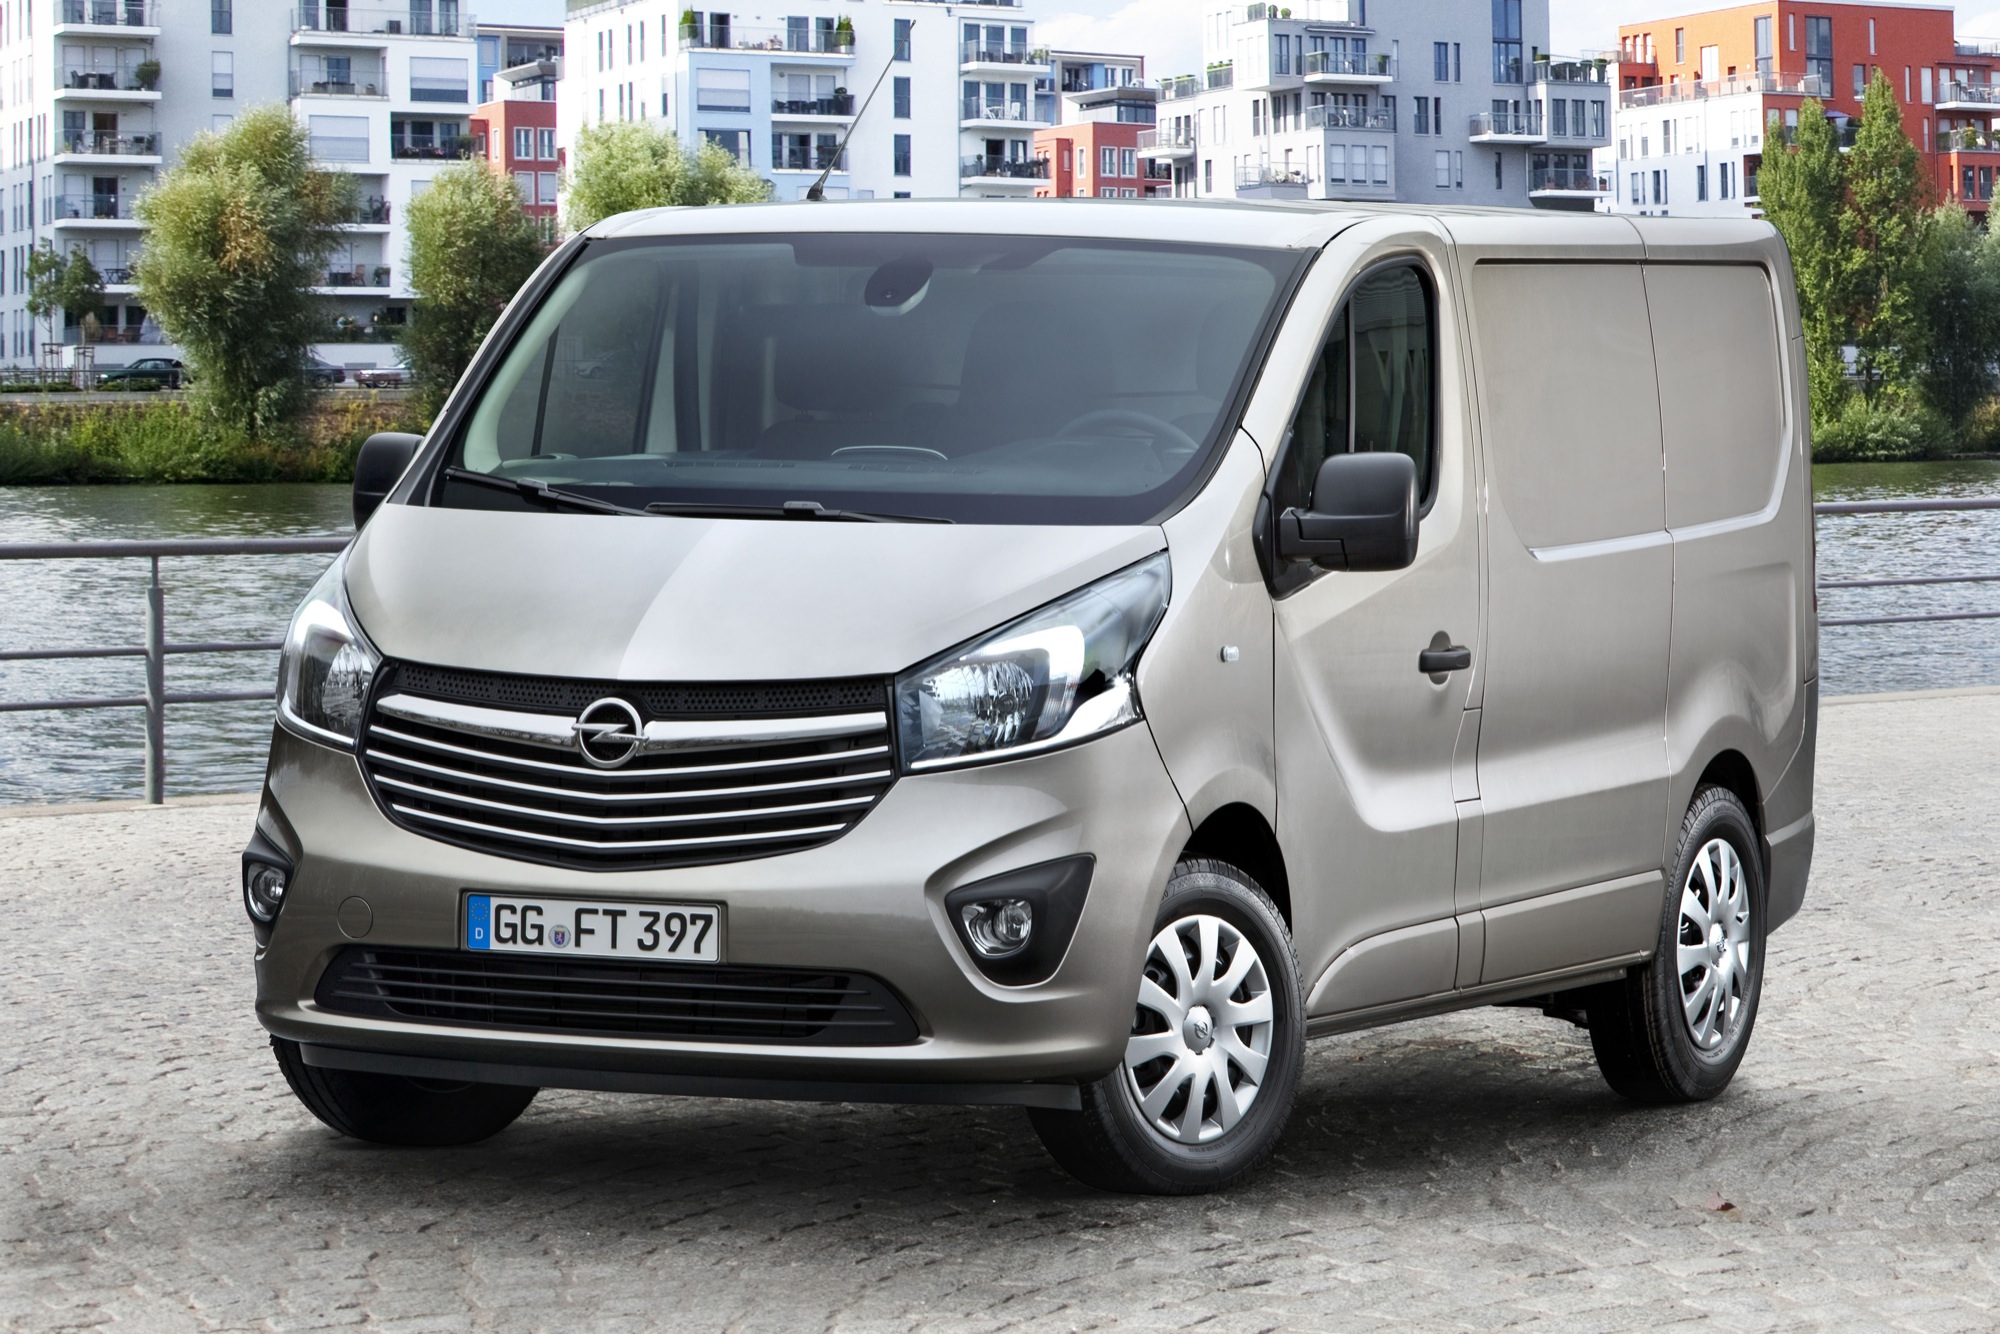 2015 Opel Vivaro Commercial Van Revealed  GM Authority